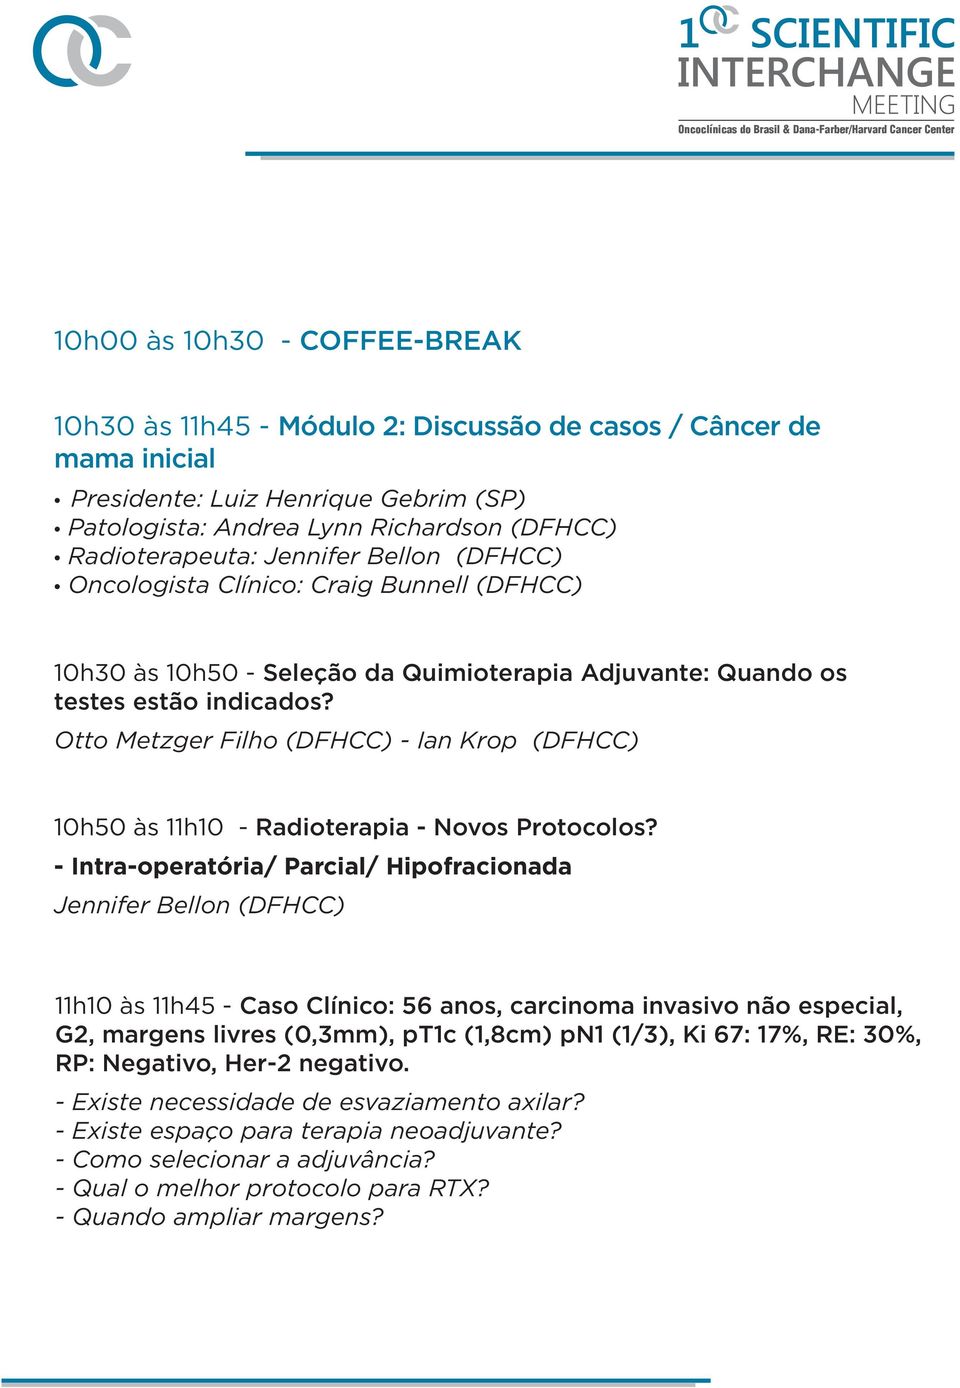 Otto Metzger Filho (DFHCC) - Ian Krop (DFHCC) 10h50 às 11h10 - Radioterapia - Novos Protocolos?